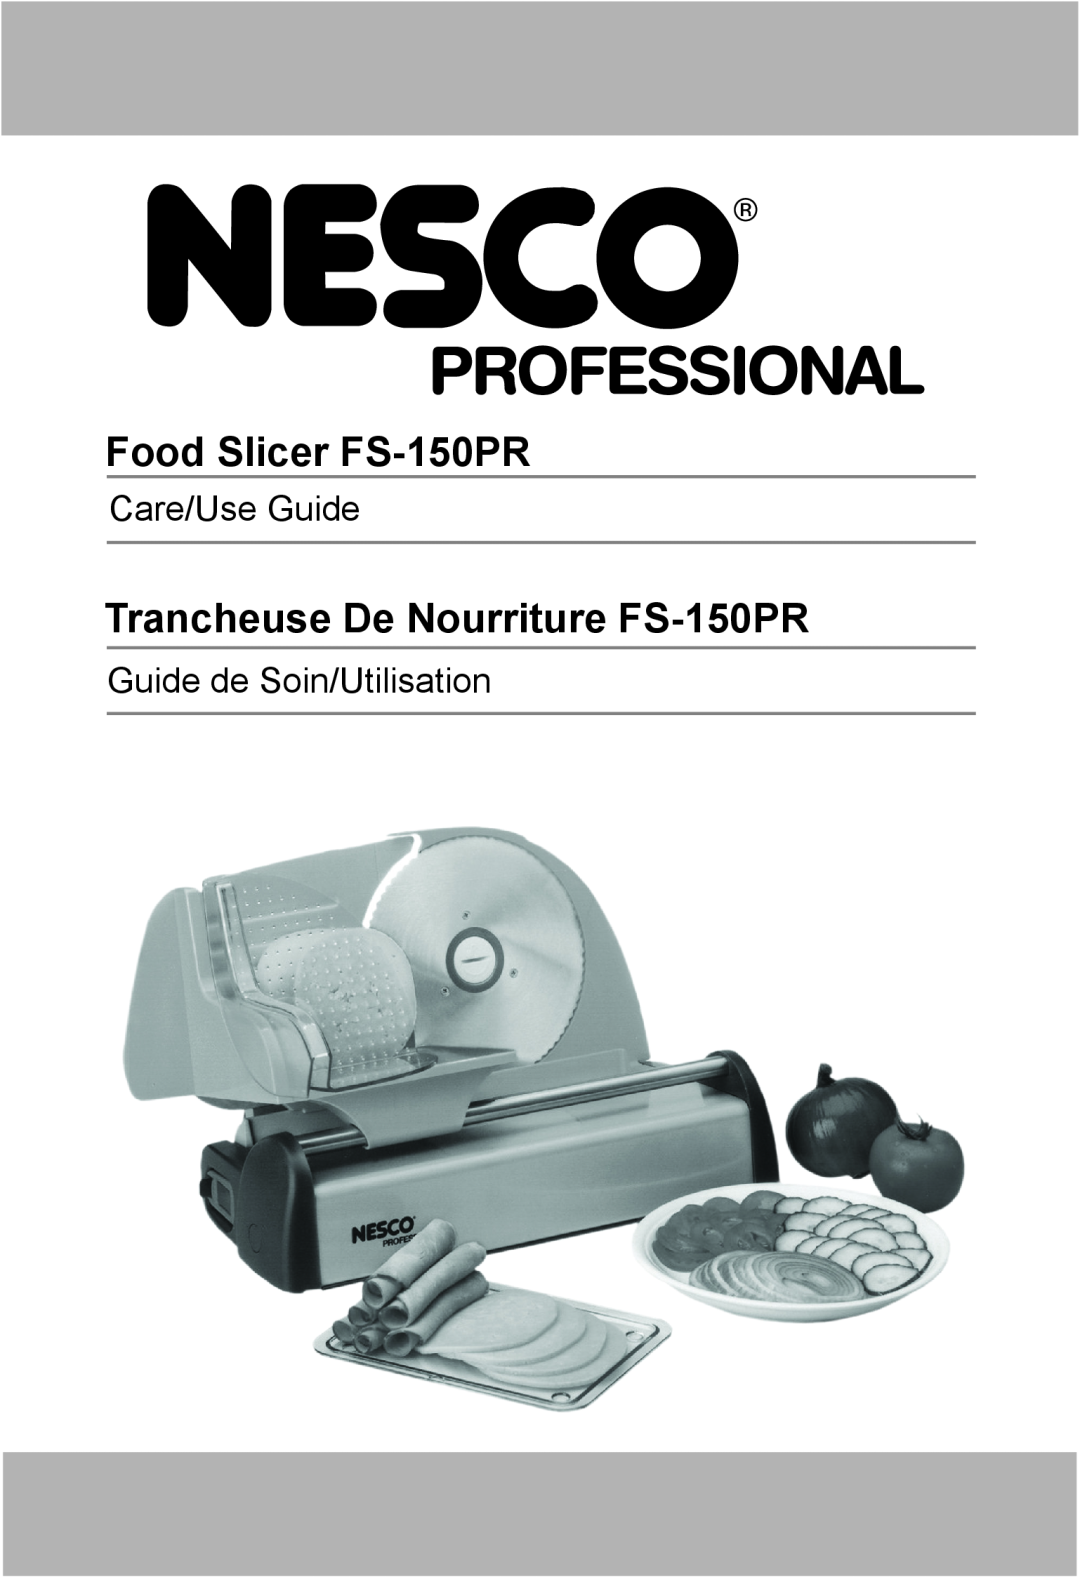 Nesco manual Food Slicer FS-150PR, Trancheuse De Nourriture FS-150PR, Care/Use Guide, Guide de Soin/Utilisation 